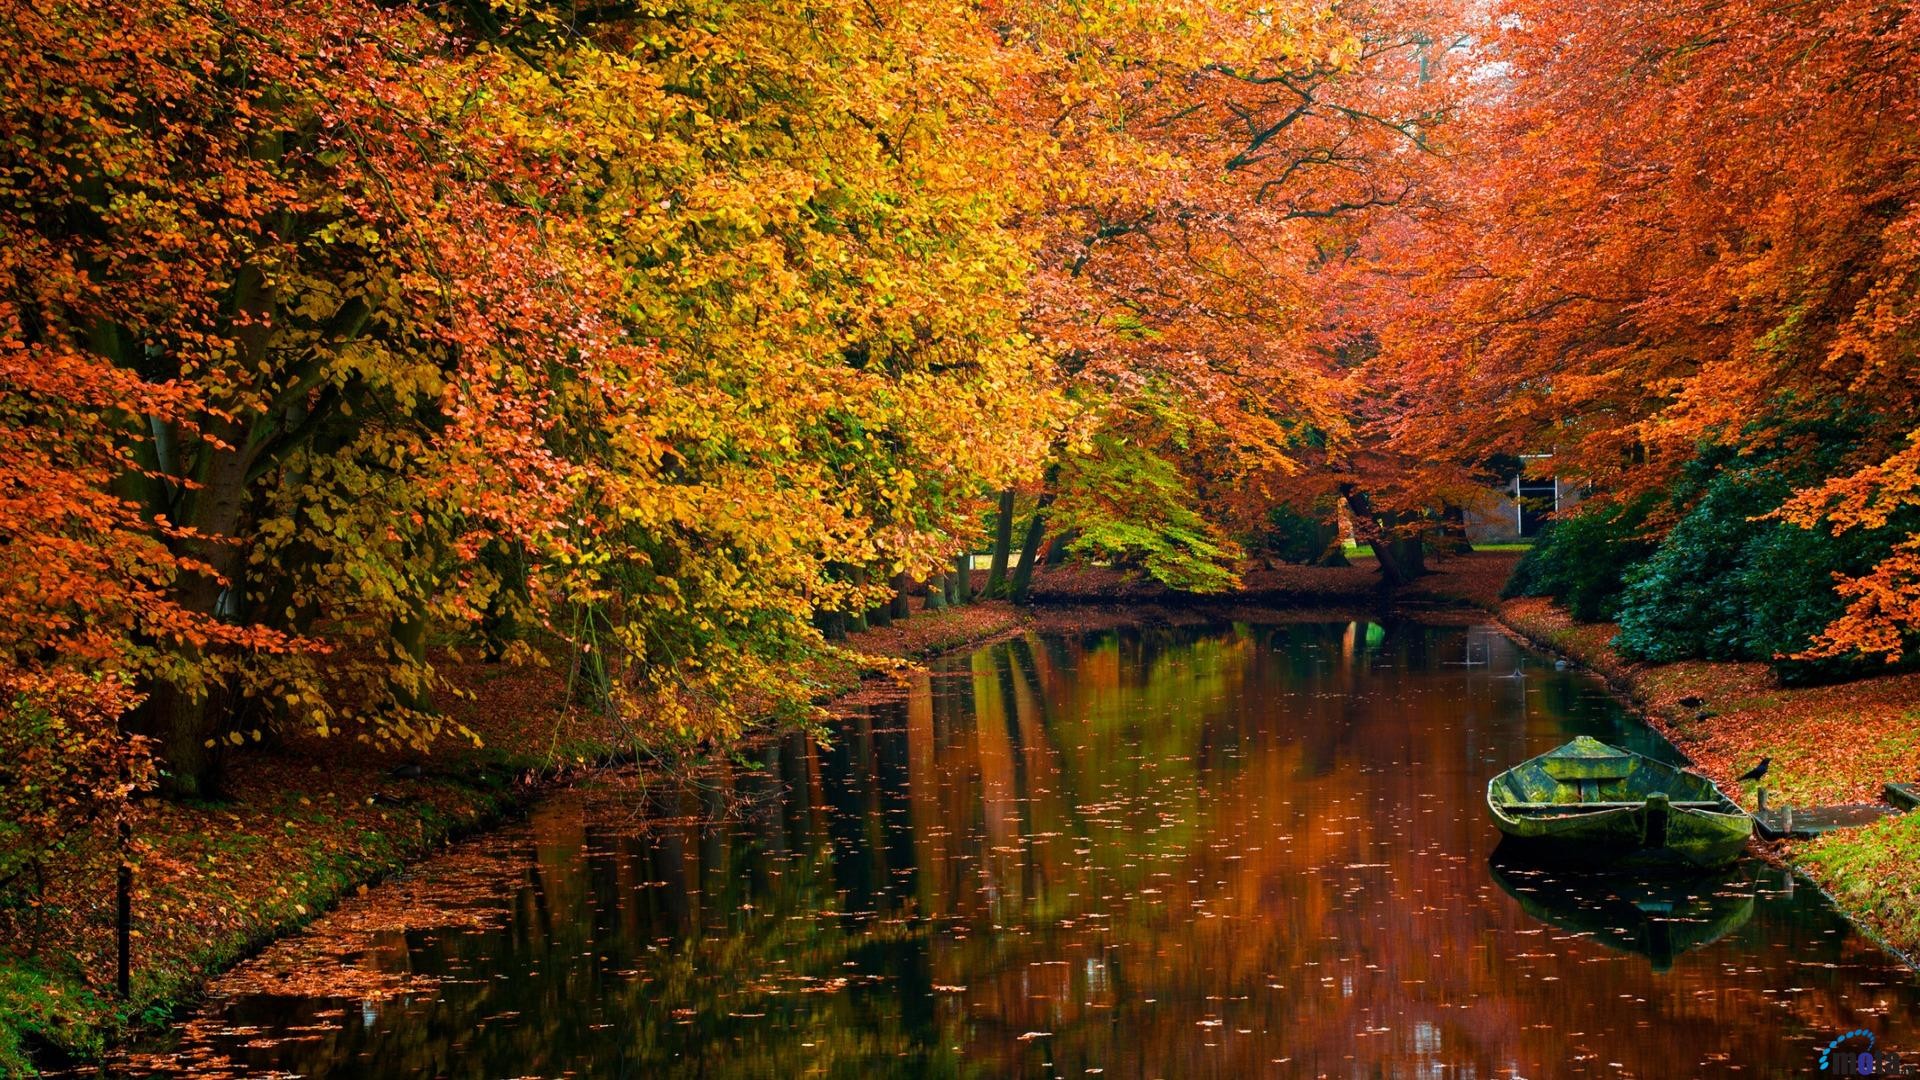 autumn nature wallpaper,natural landscape,nature,tree,reflection,leaf